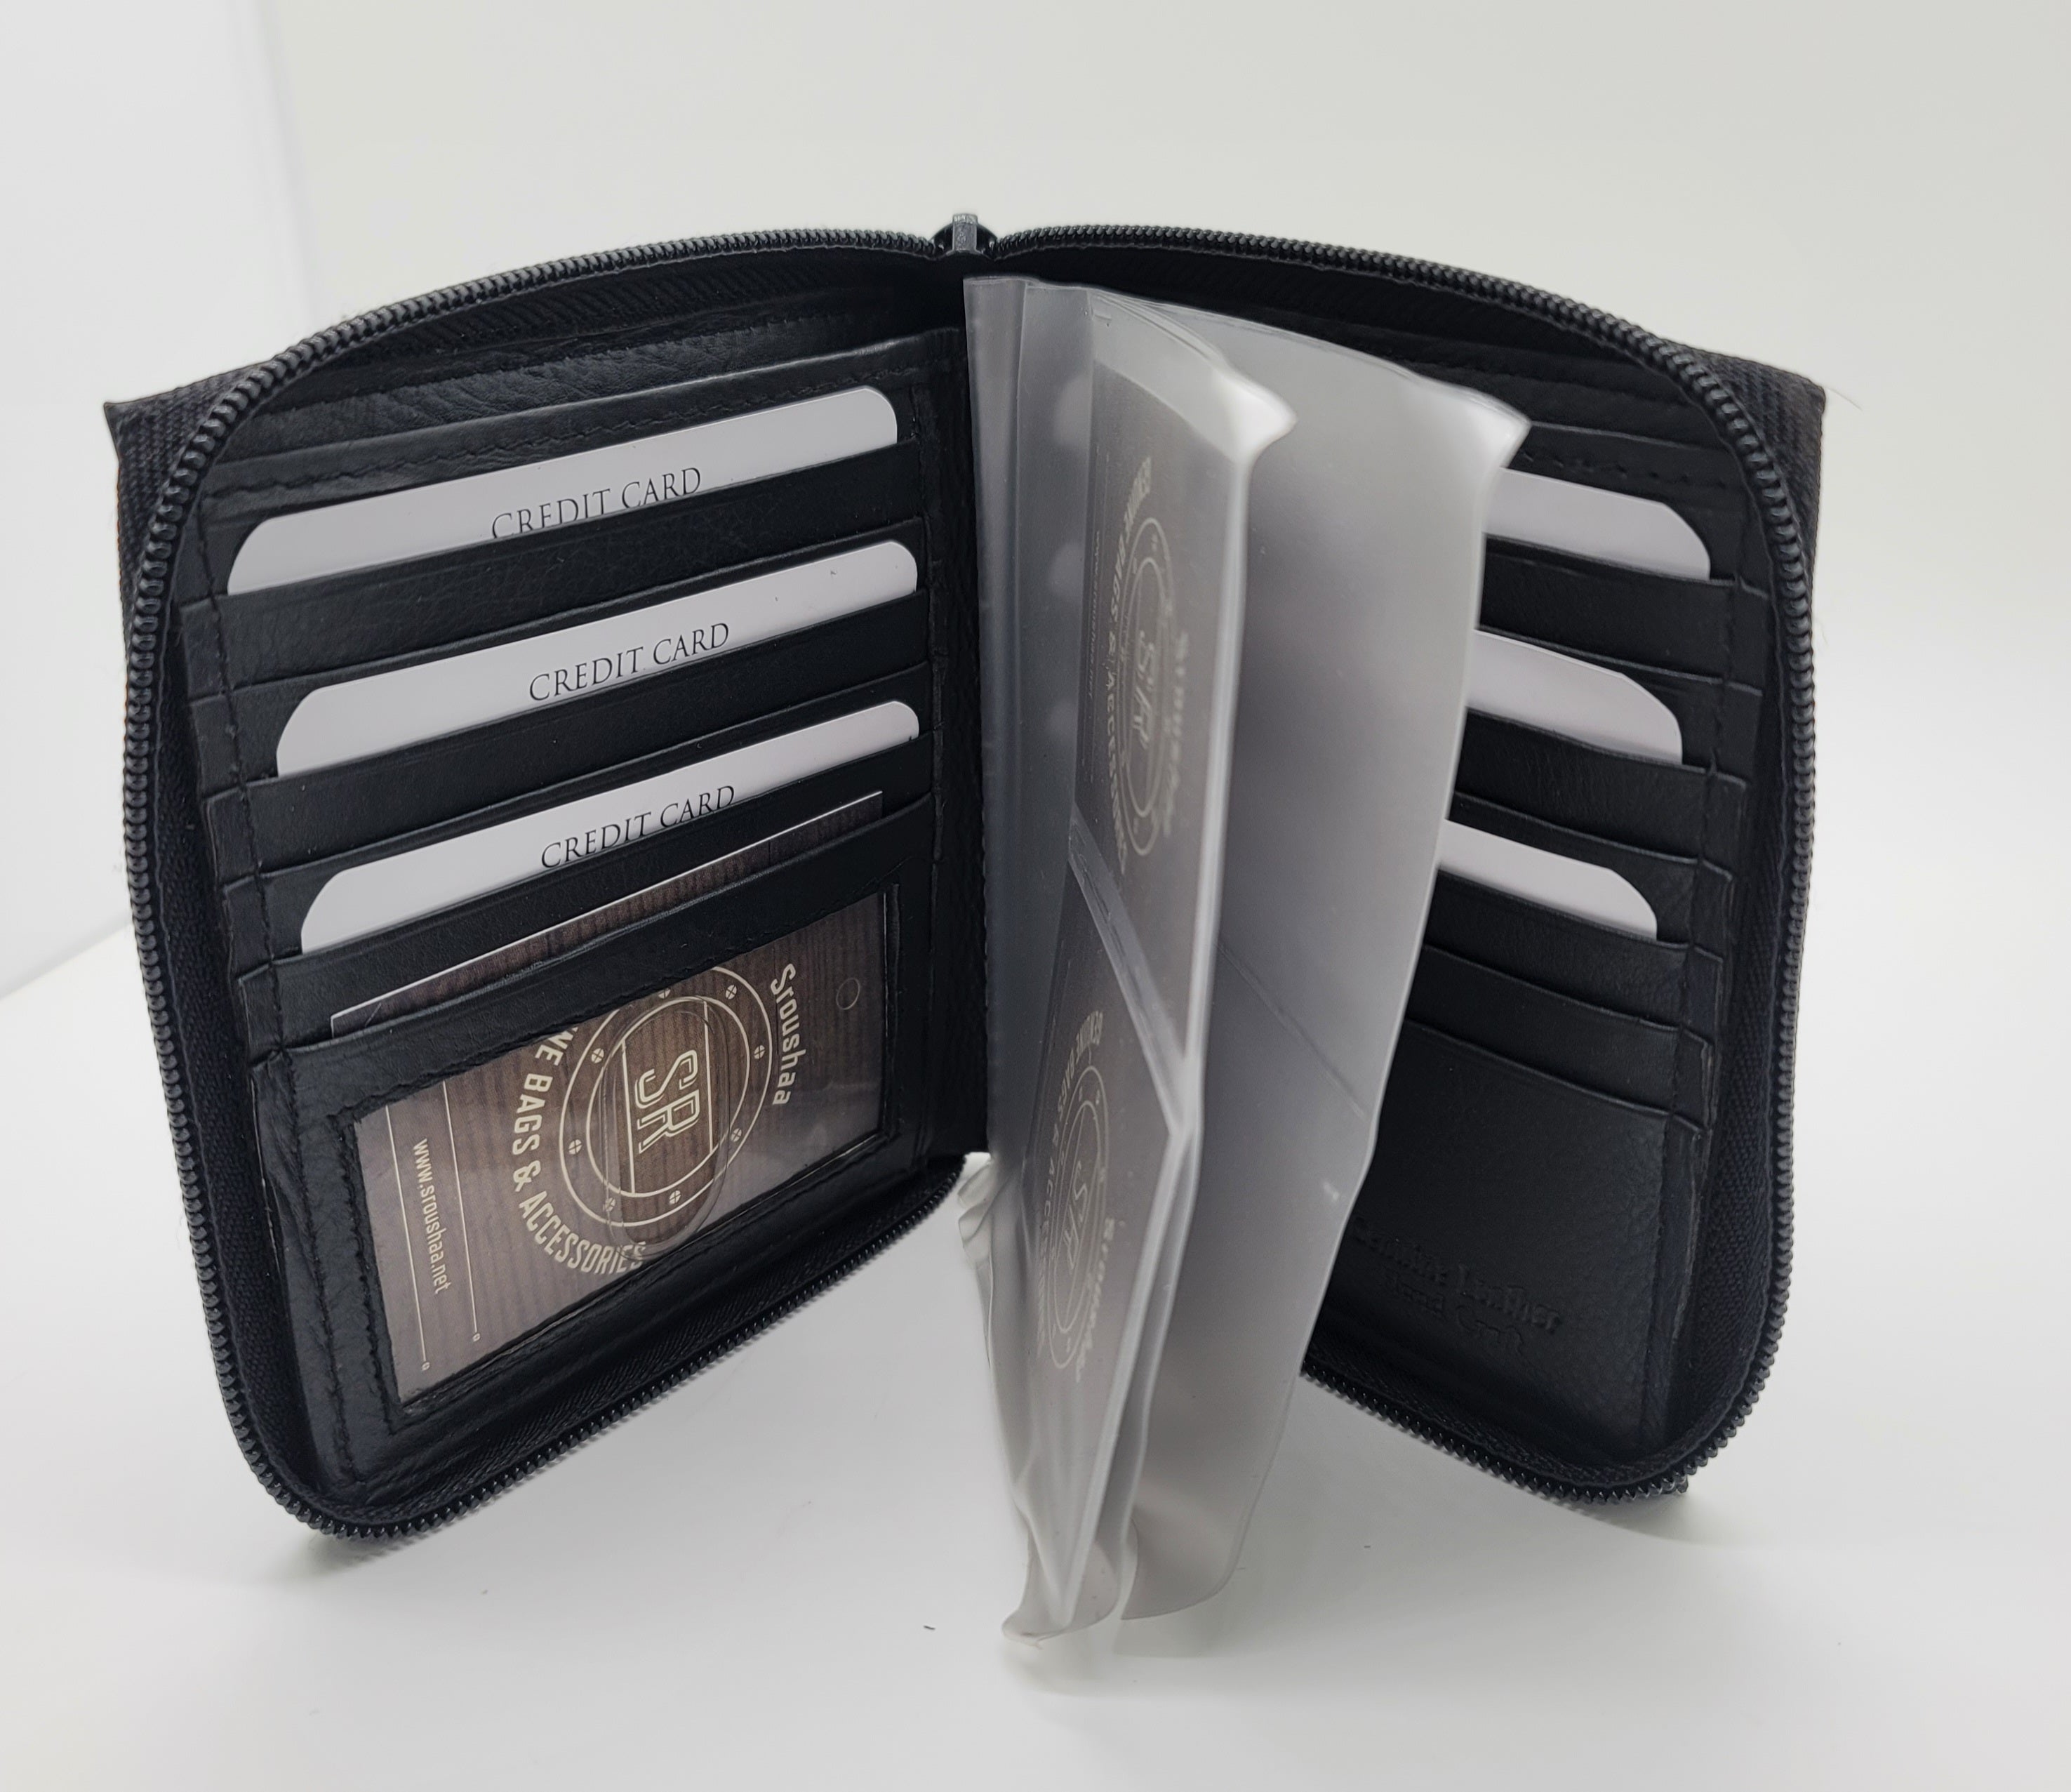 Solid Black Two Fold Zip Around Leather Passport Holder